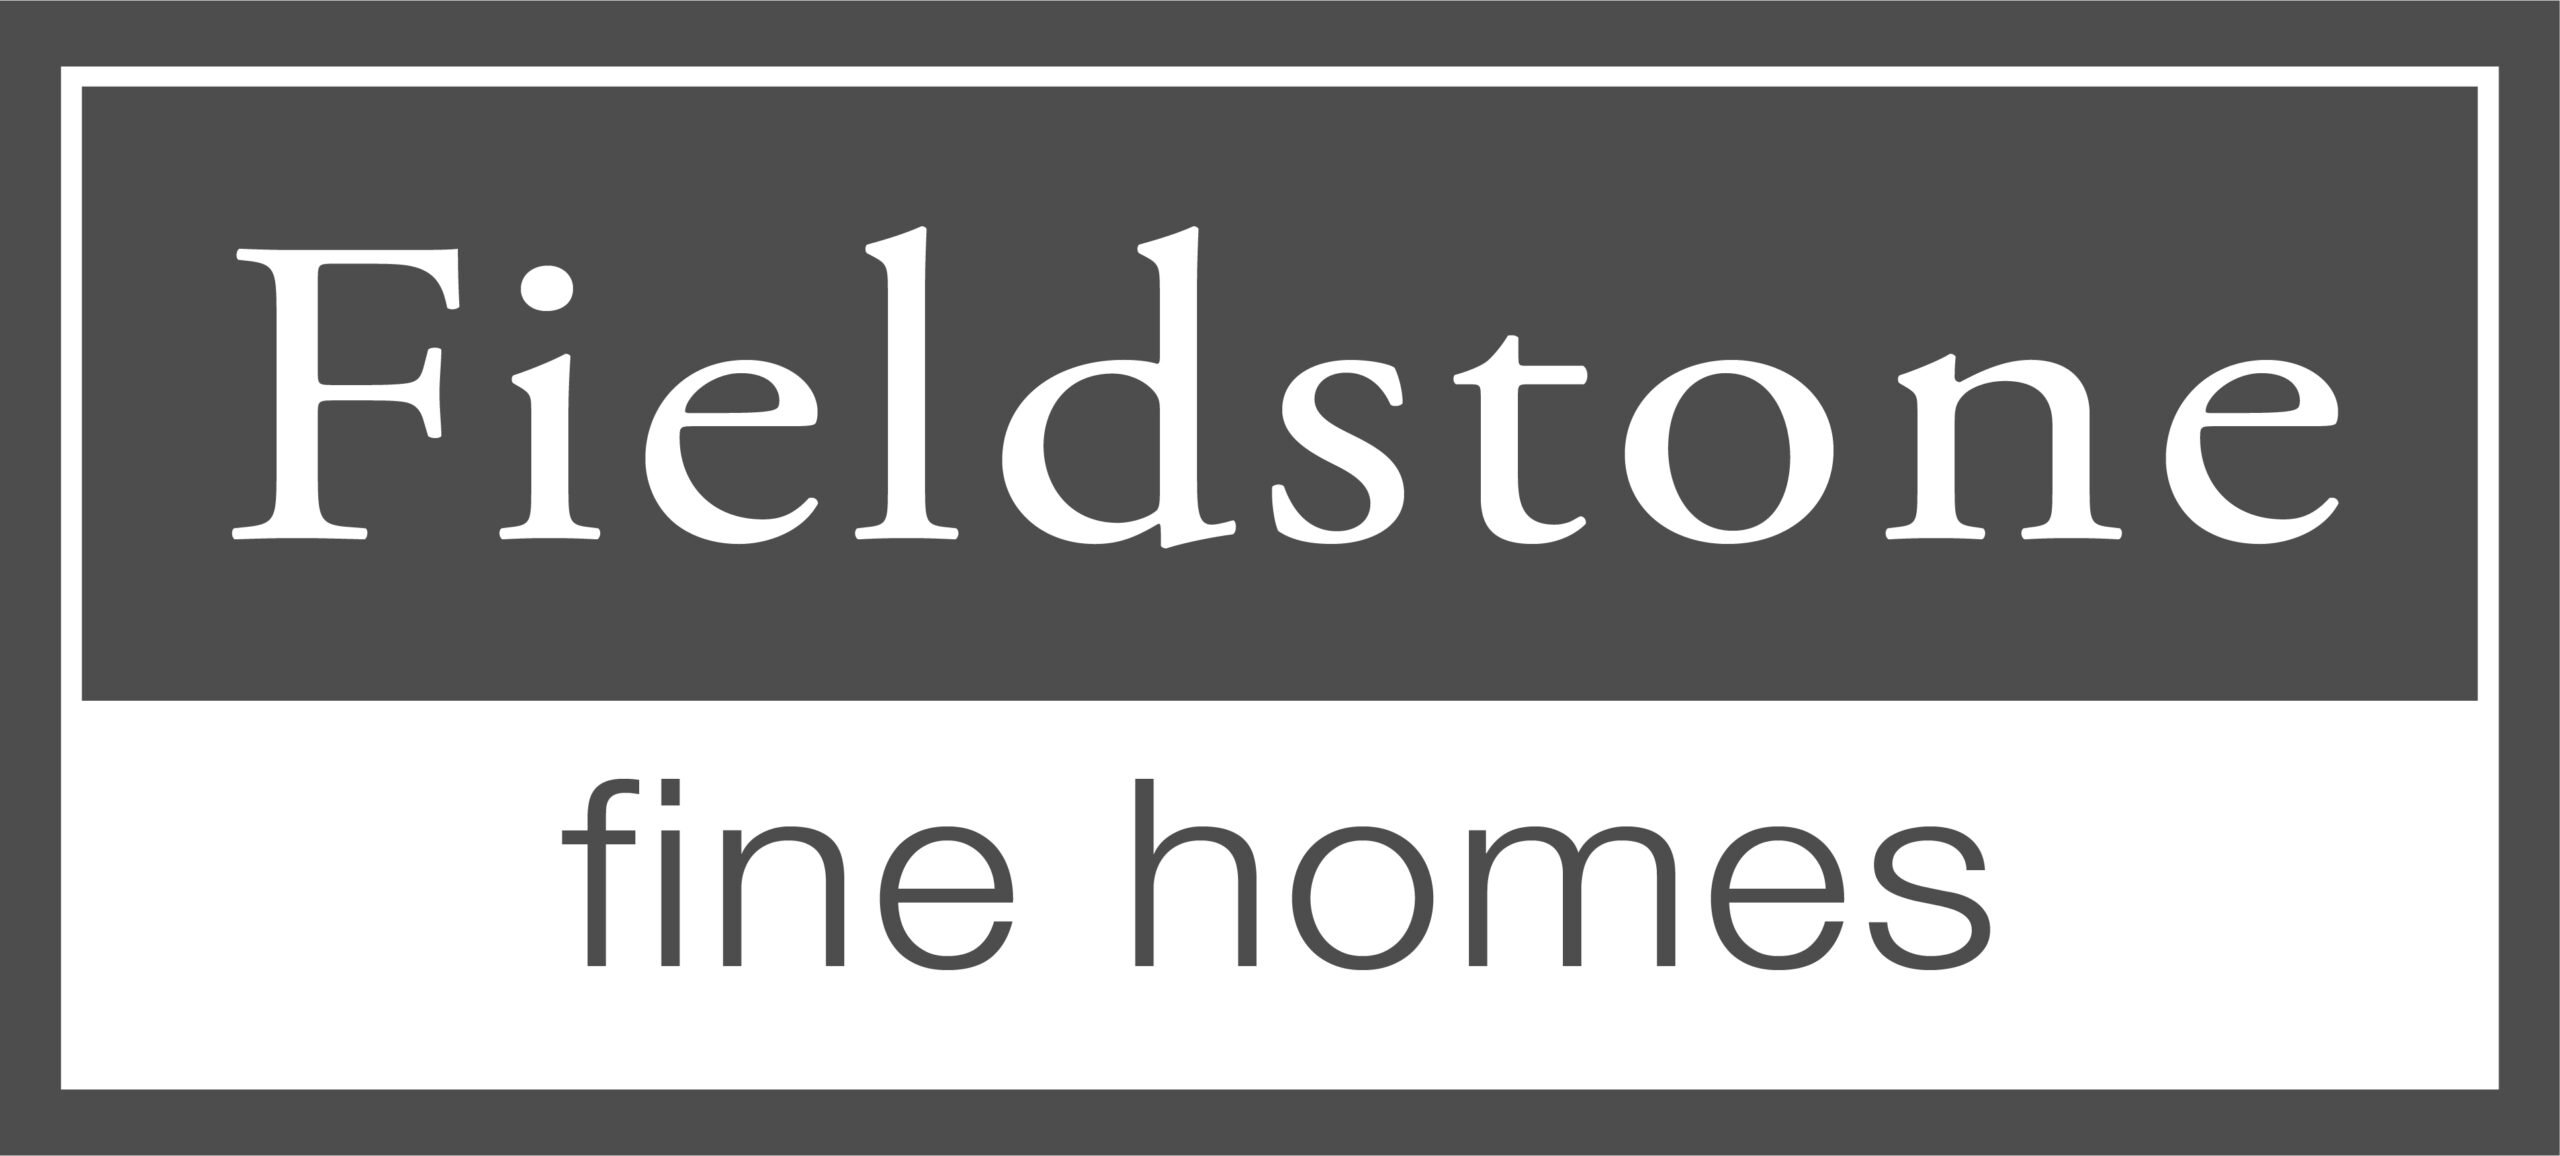 Fieldstone Homes, LLC